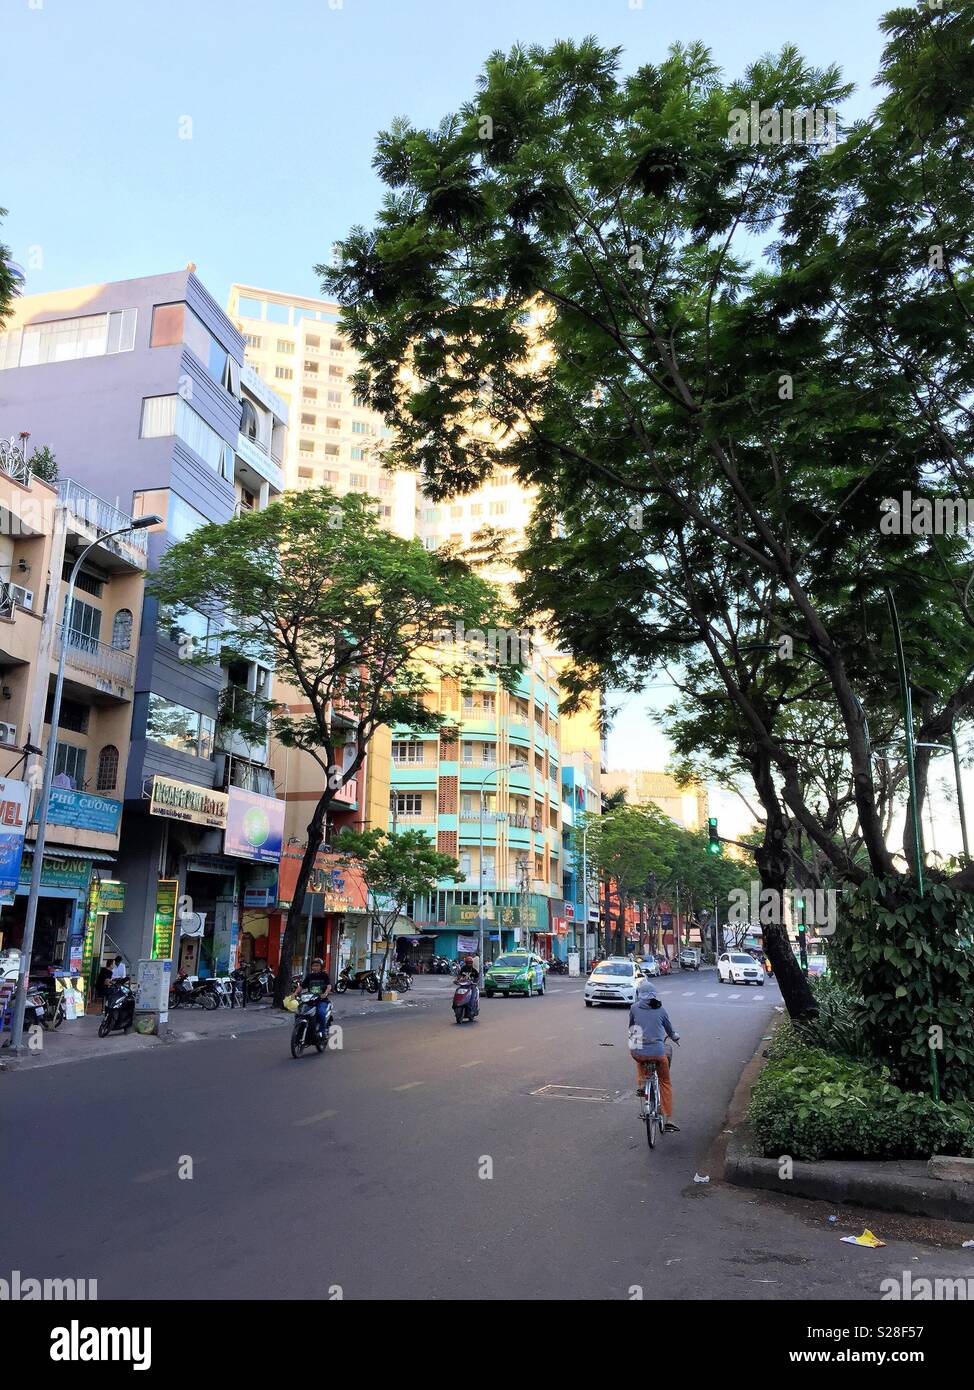 Early street scene in saigon streets. Stock Photo